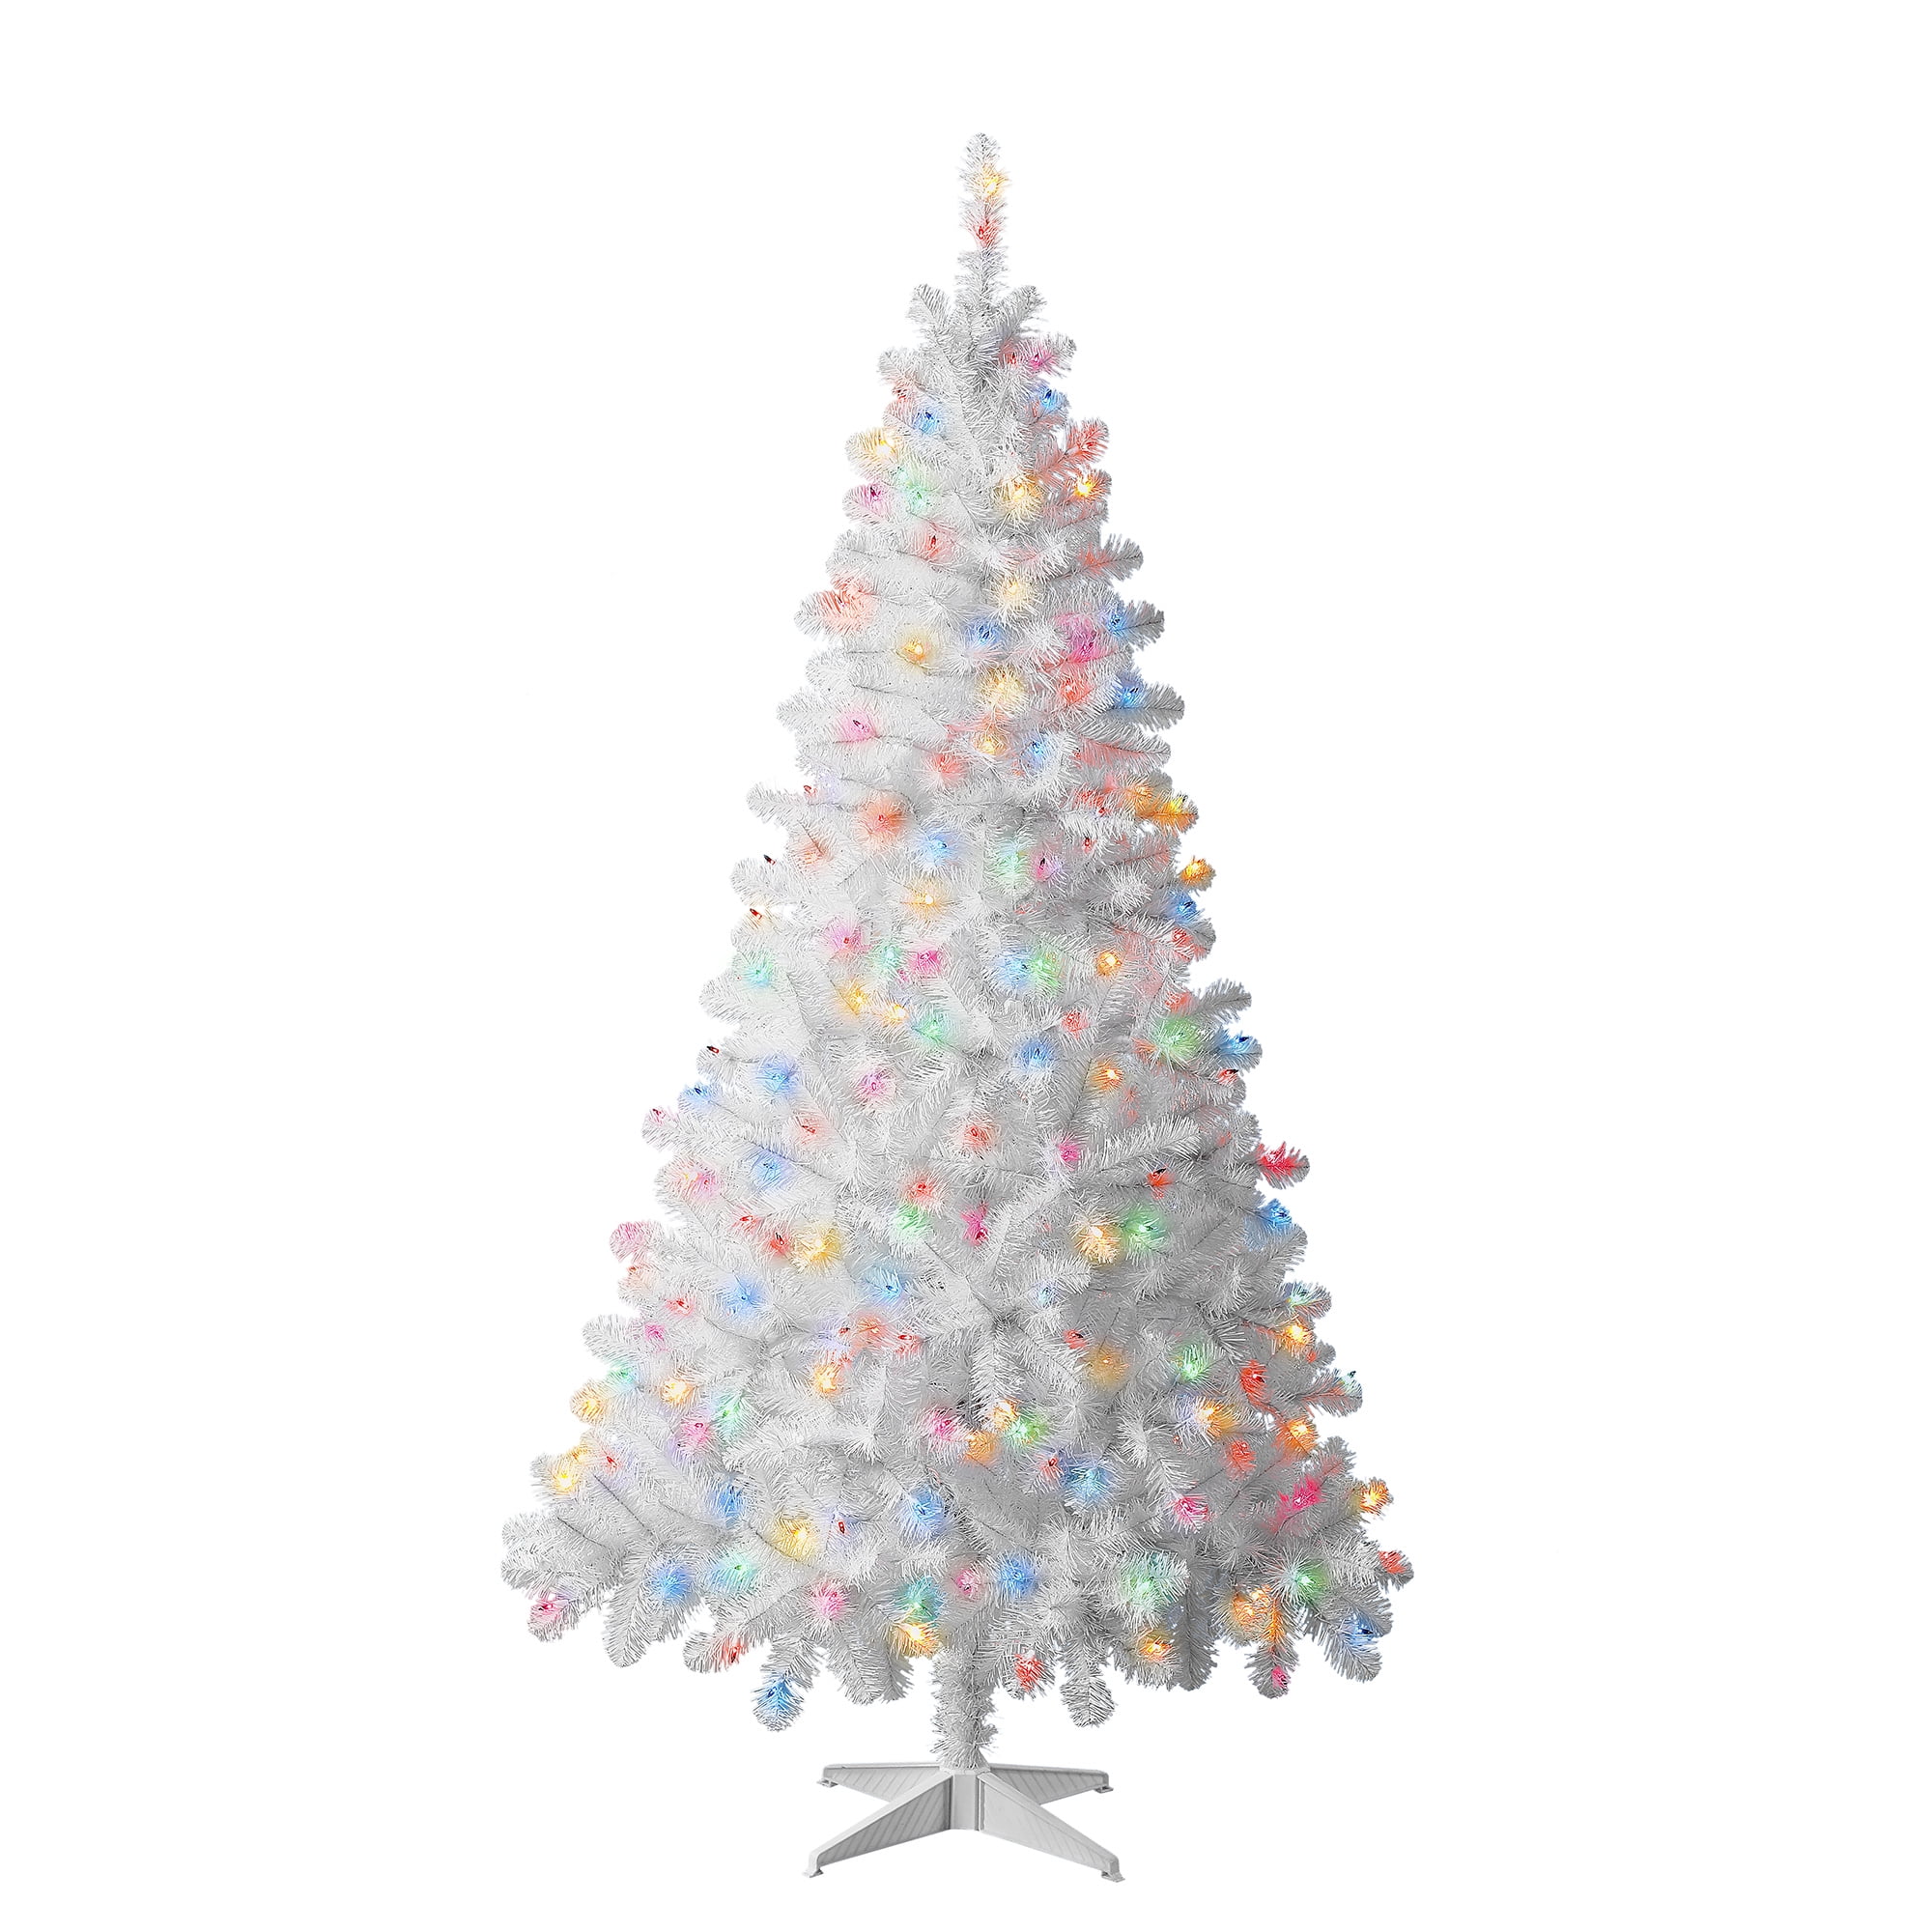 Christmas Holiday New Year 2020 Tools & Seasonal Decor Tree Posters Lights Gifts 